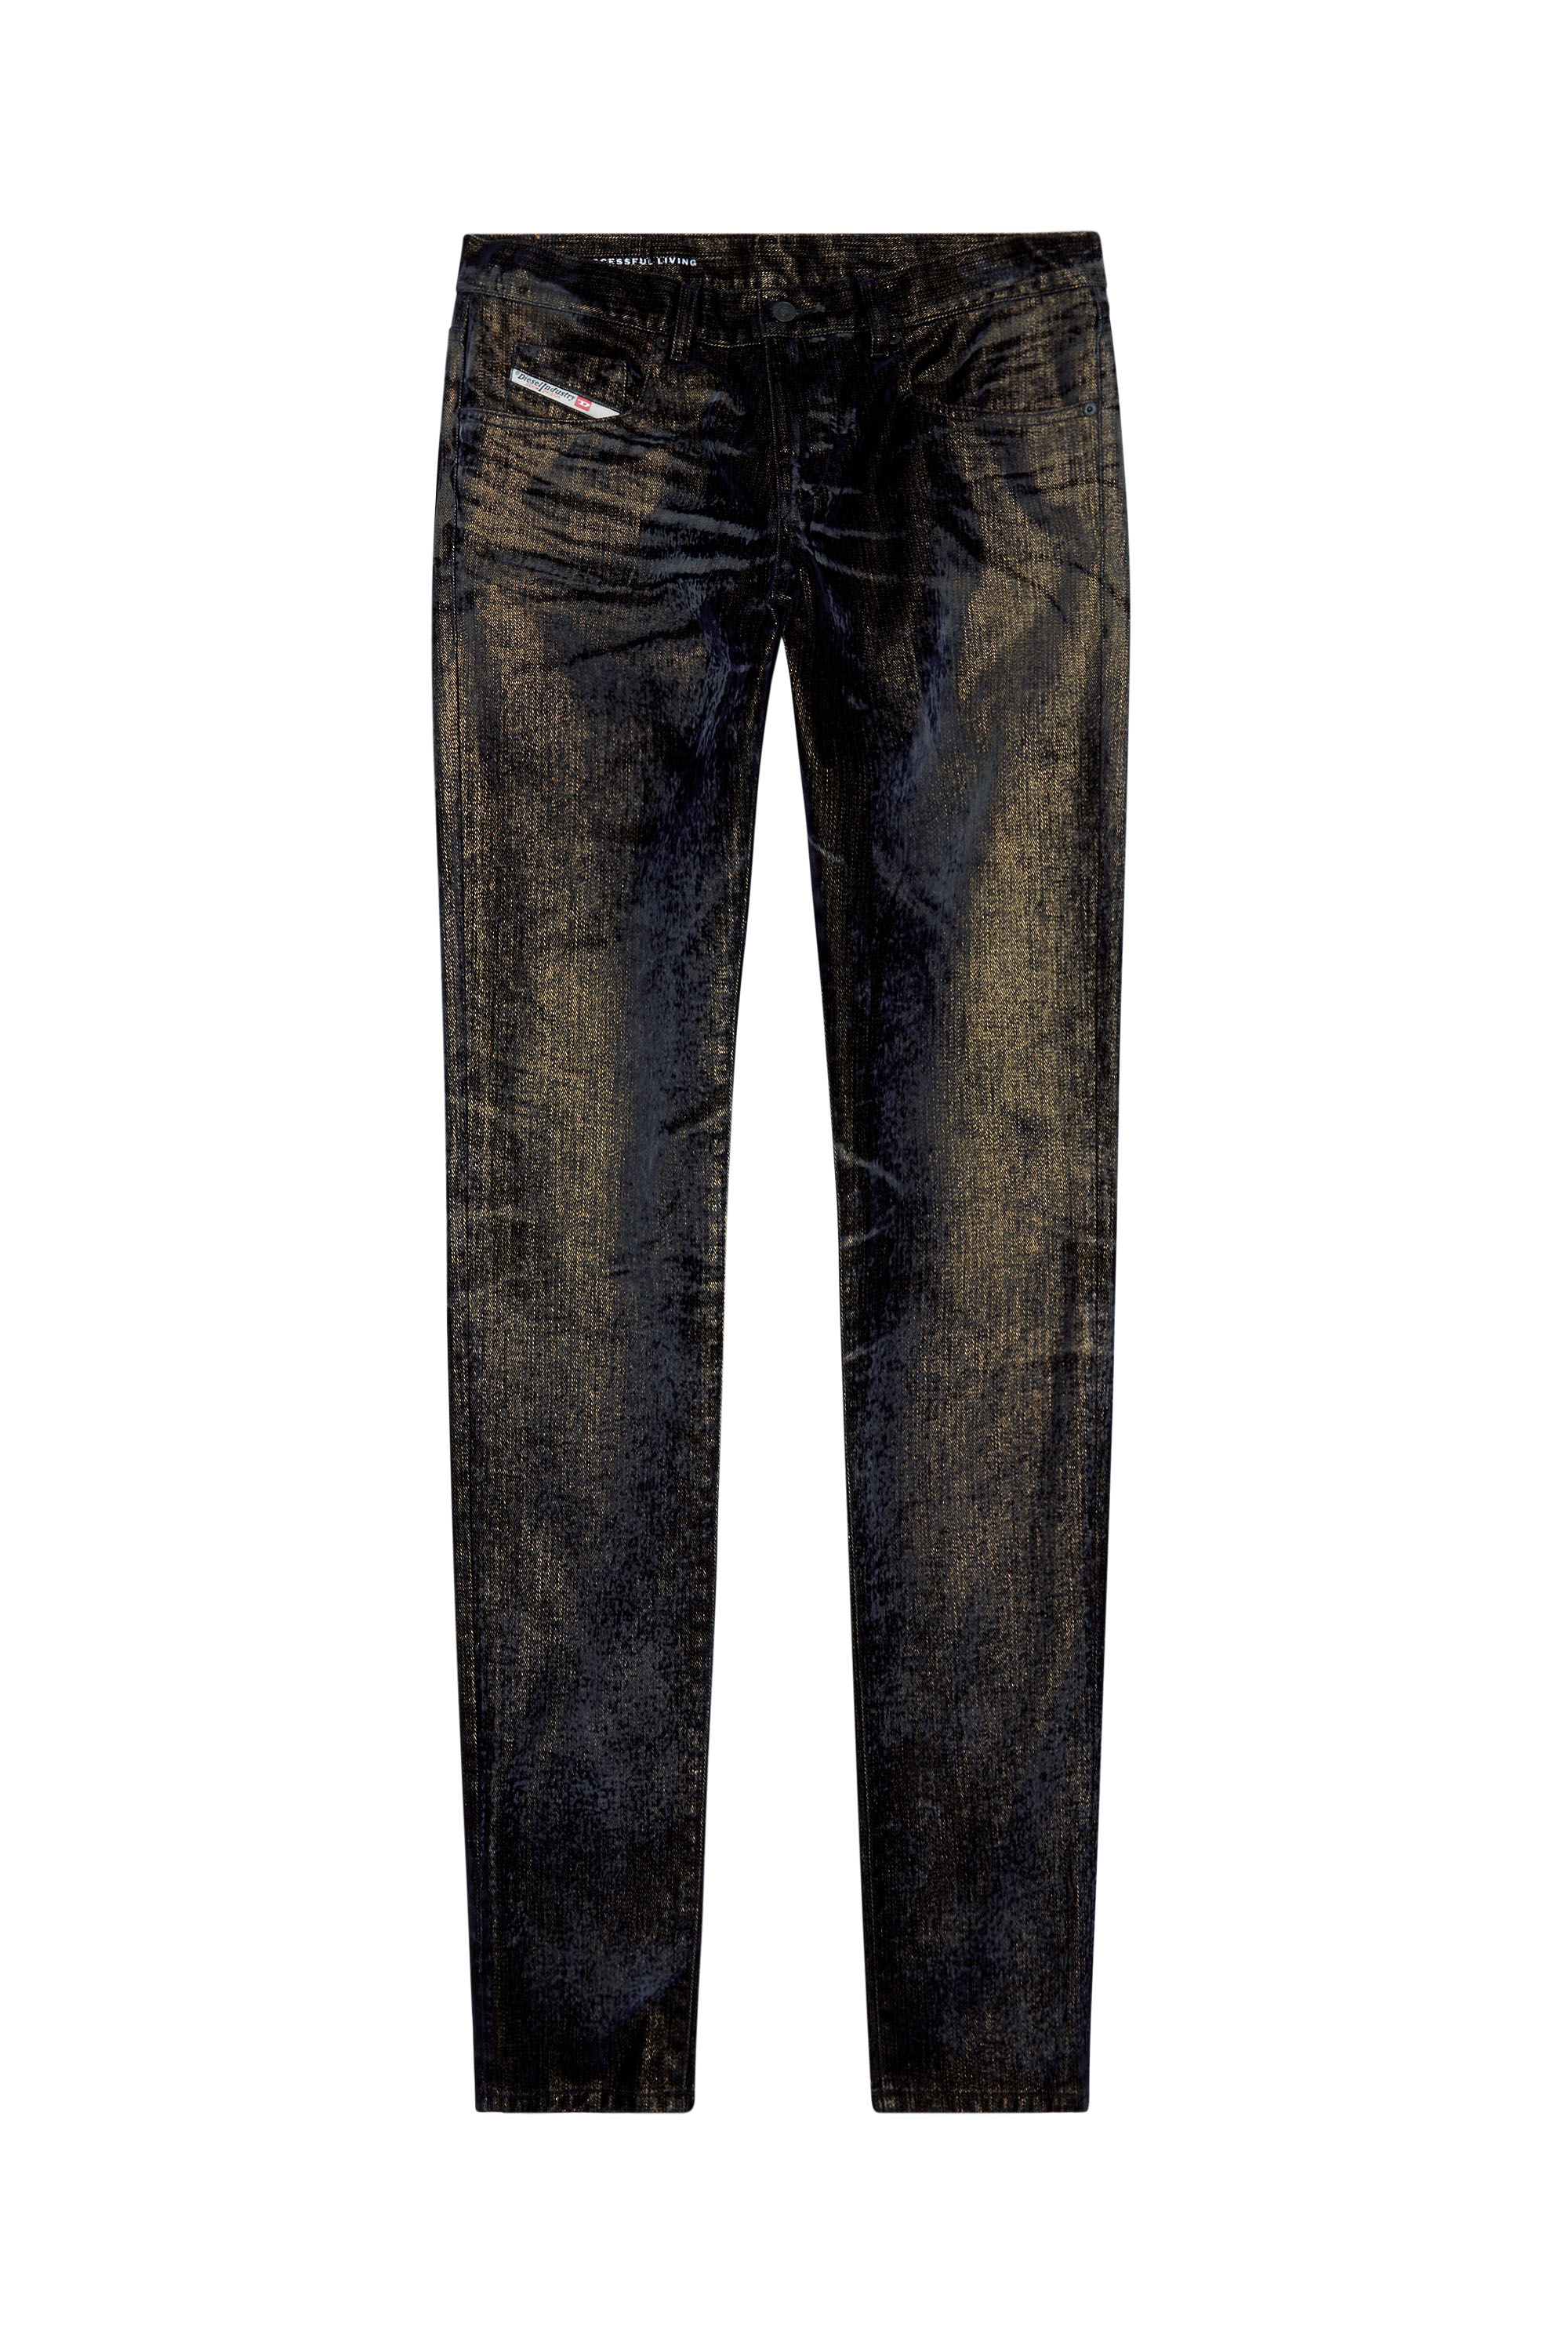 Diesel - Slim Jeans 2019 D-Strukt 09I49, Hombre Slim Jeans - 2019 D-Strukt in Negro - Image 5